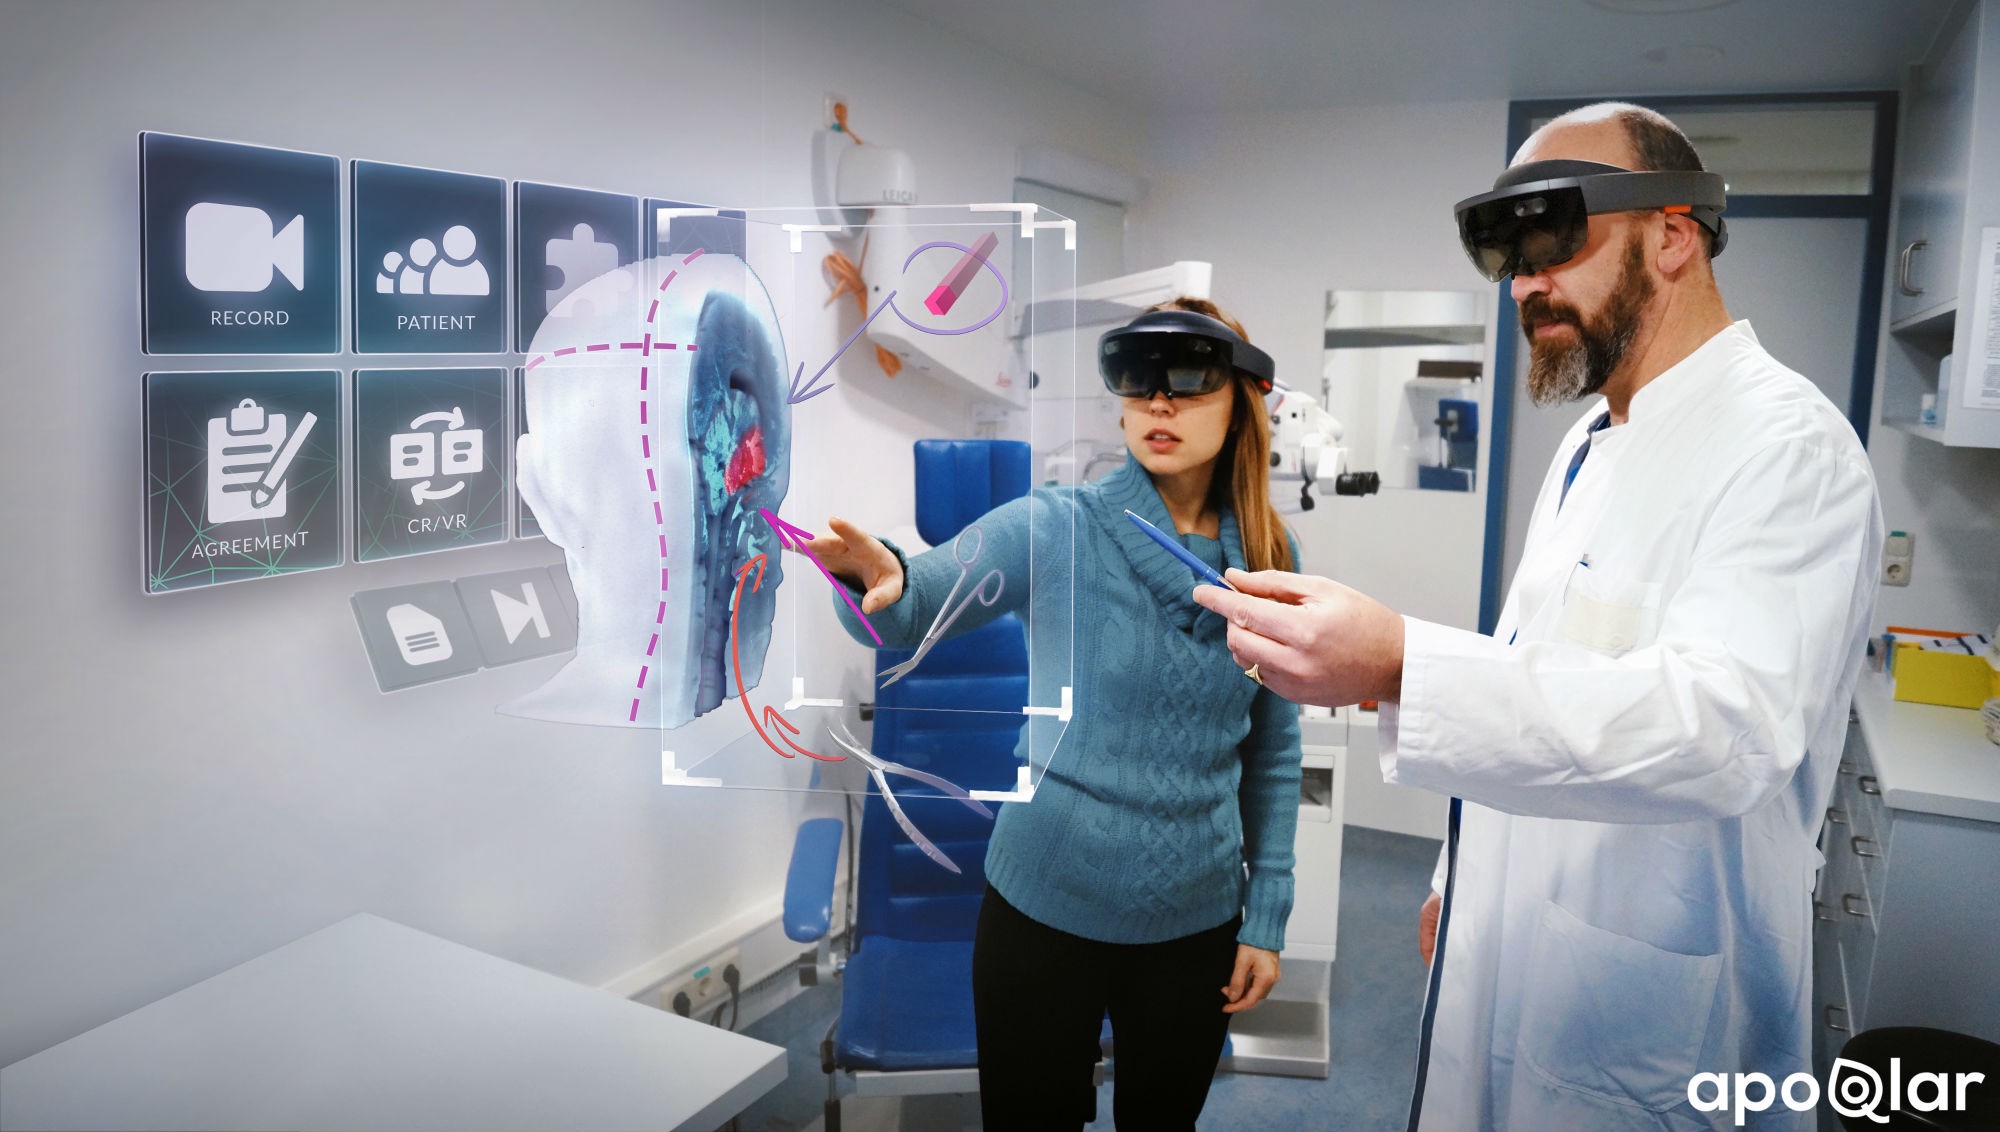 ARVR Future Of Marketing 26.7 Million VR Shipment by 2025